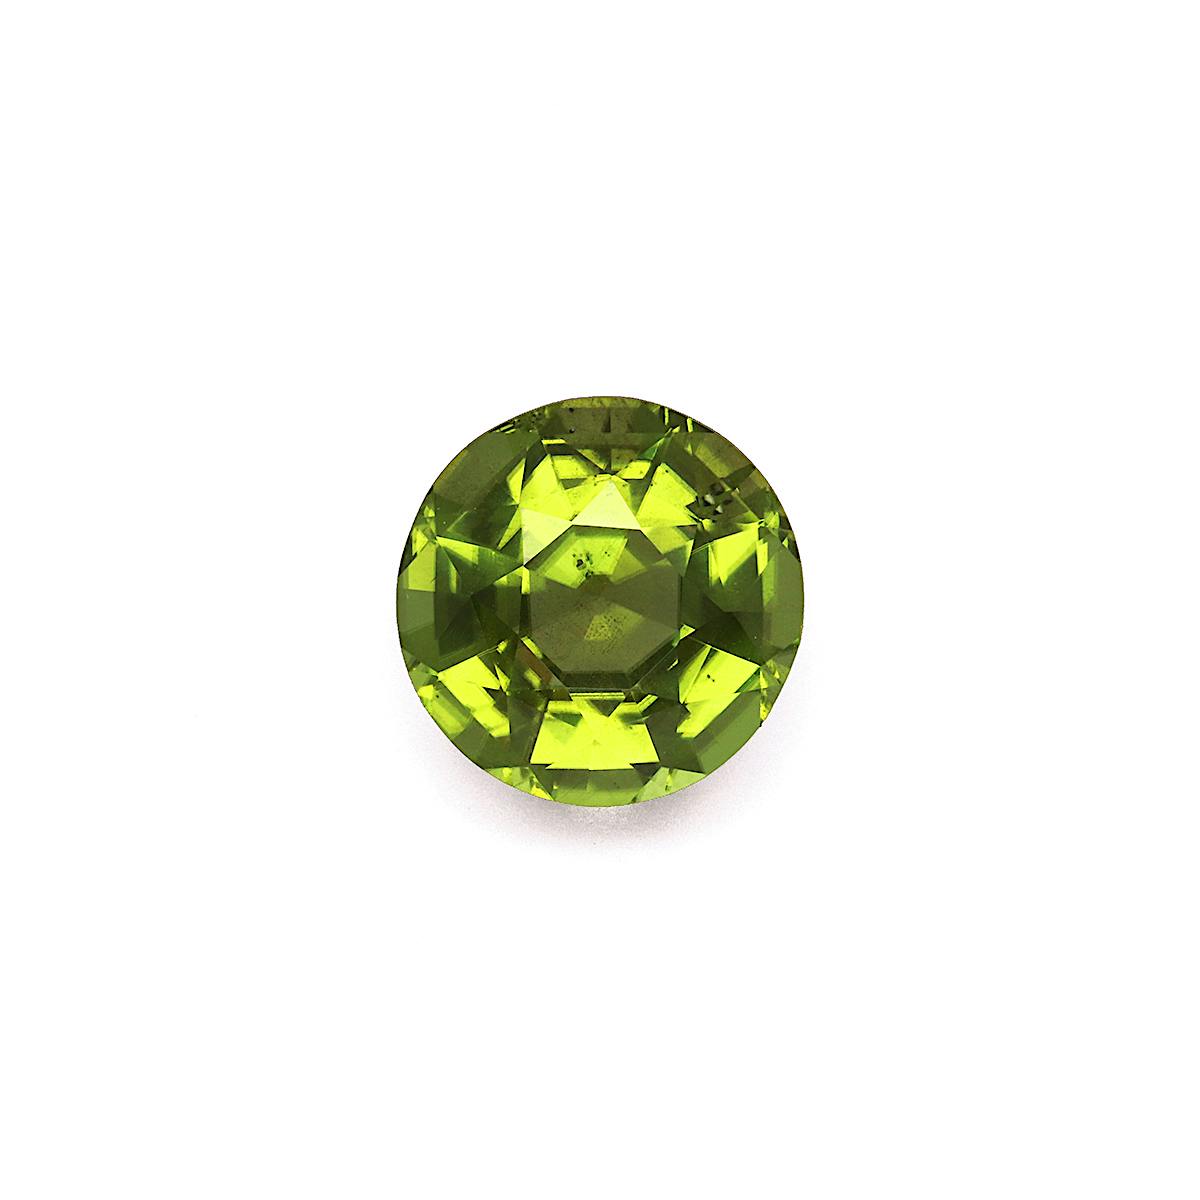 Green Peridot 4.97ct - Main Image